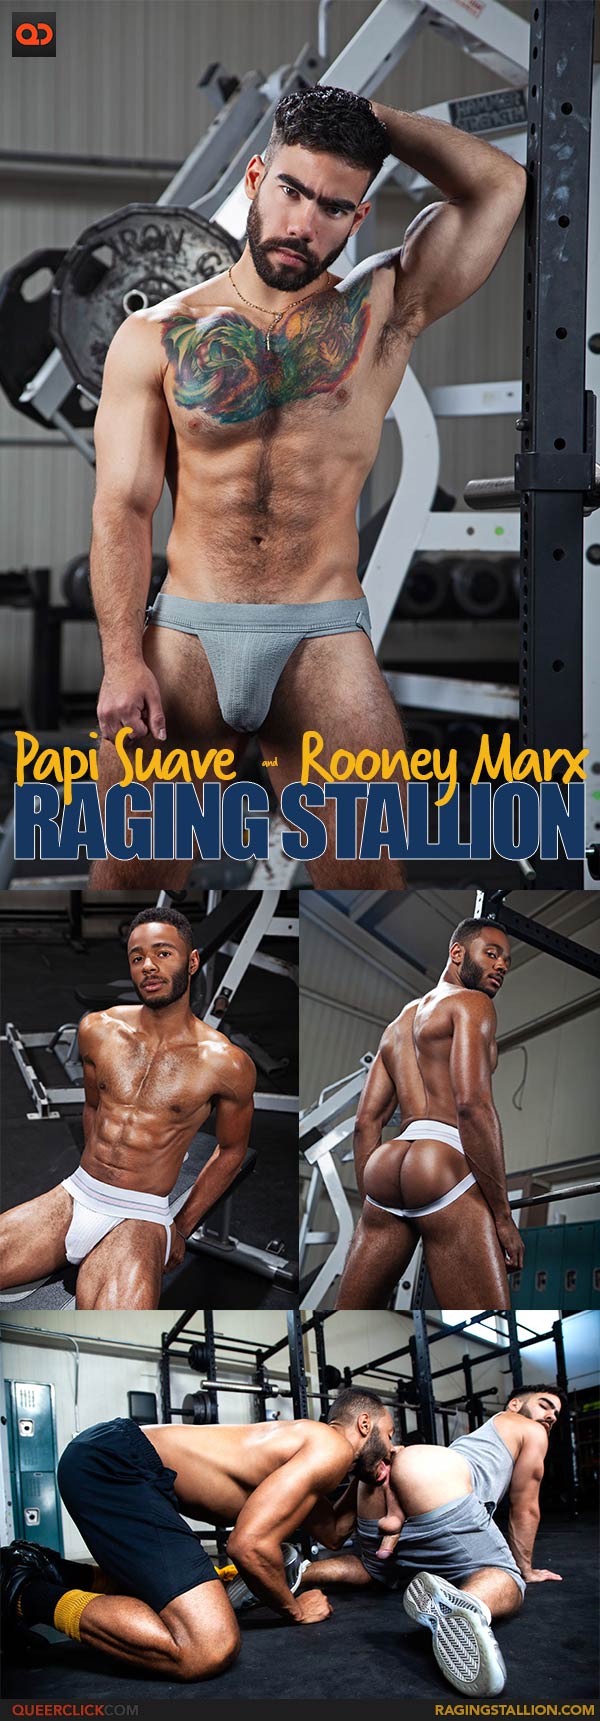 Raging Stallion: Papi Suave and Rooney Marx